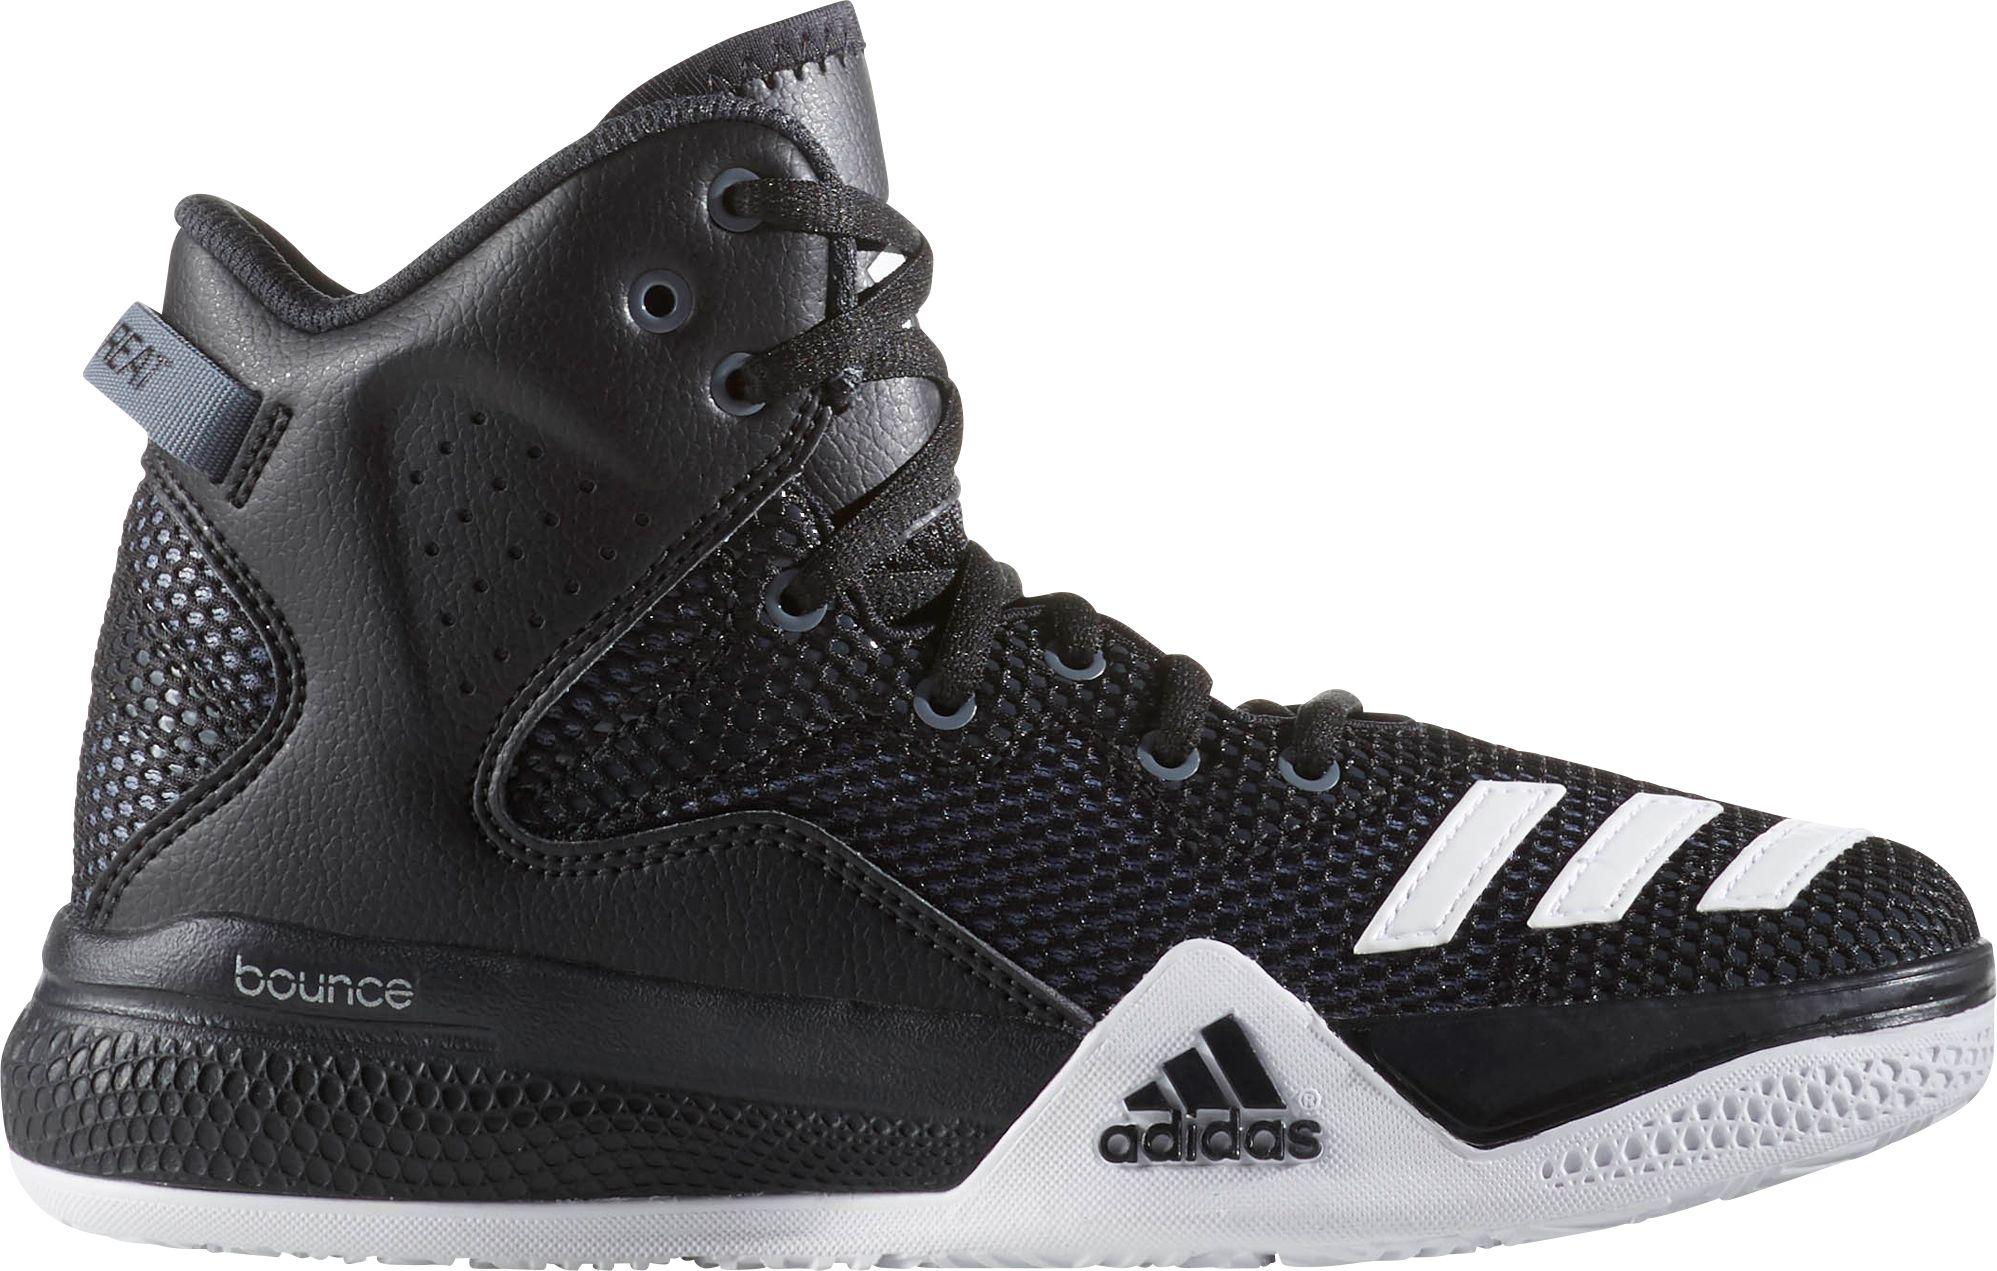 adidas dual threat basketball shoes Buy 